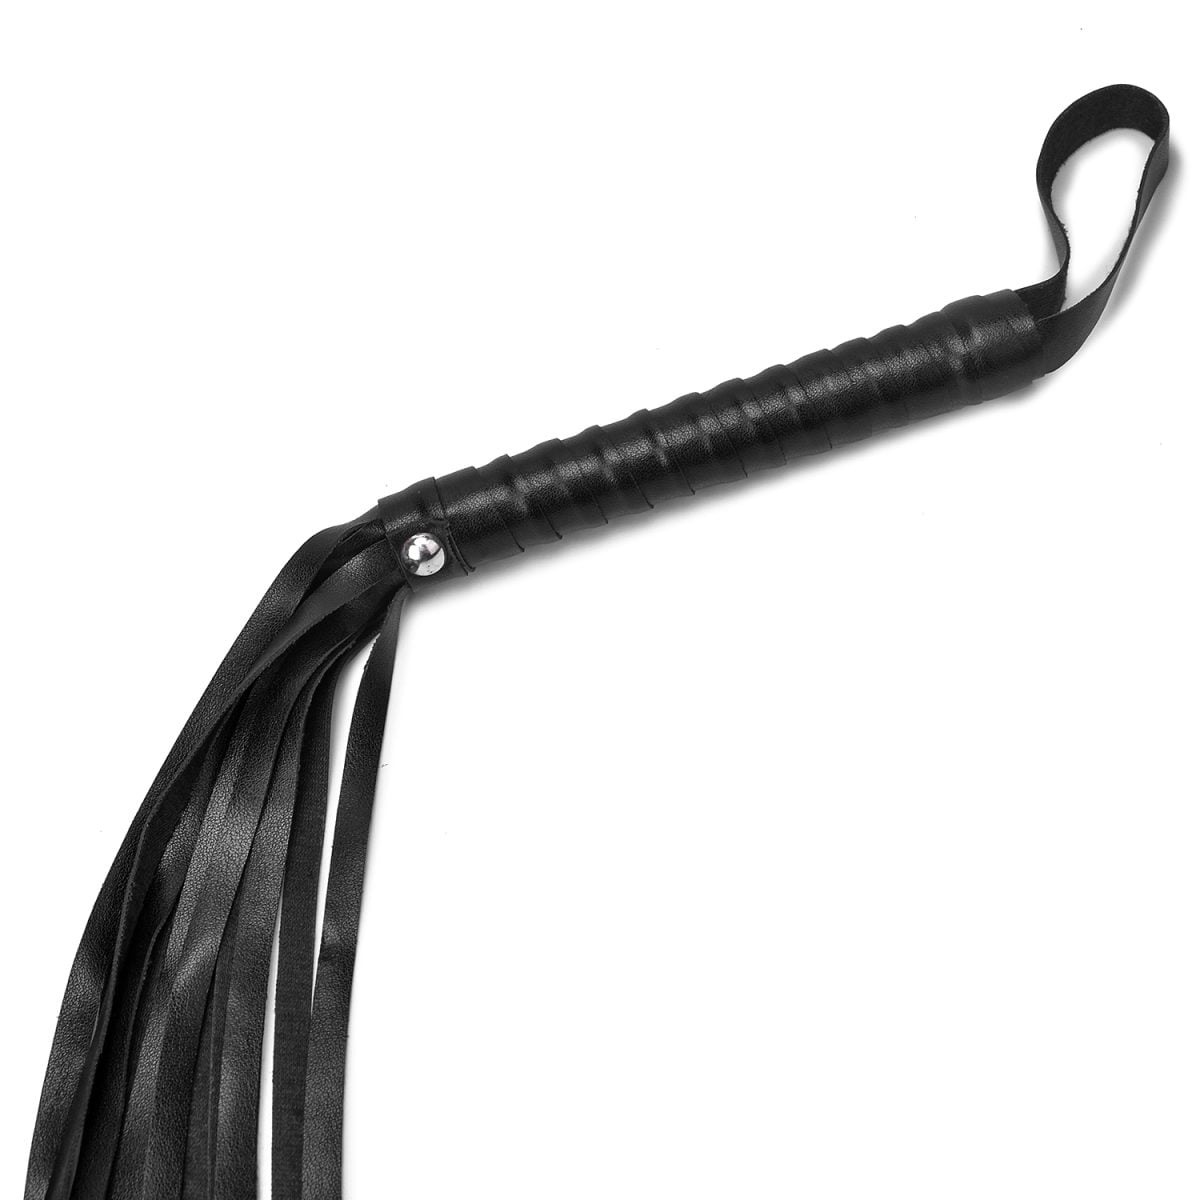 Fine Sport BDSM Whip Leather Flirt Toy Flogger | Paddles & Whips YDK8009 bdsm whip leather flirt toy flogger 3